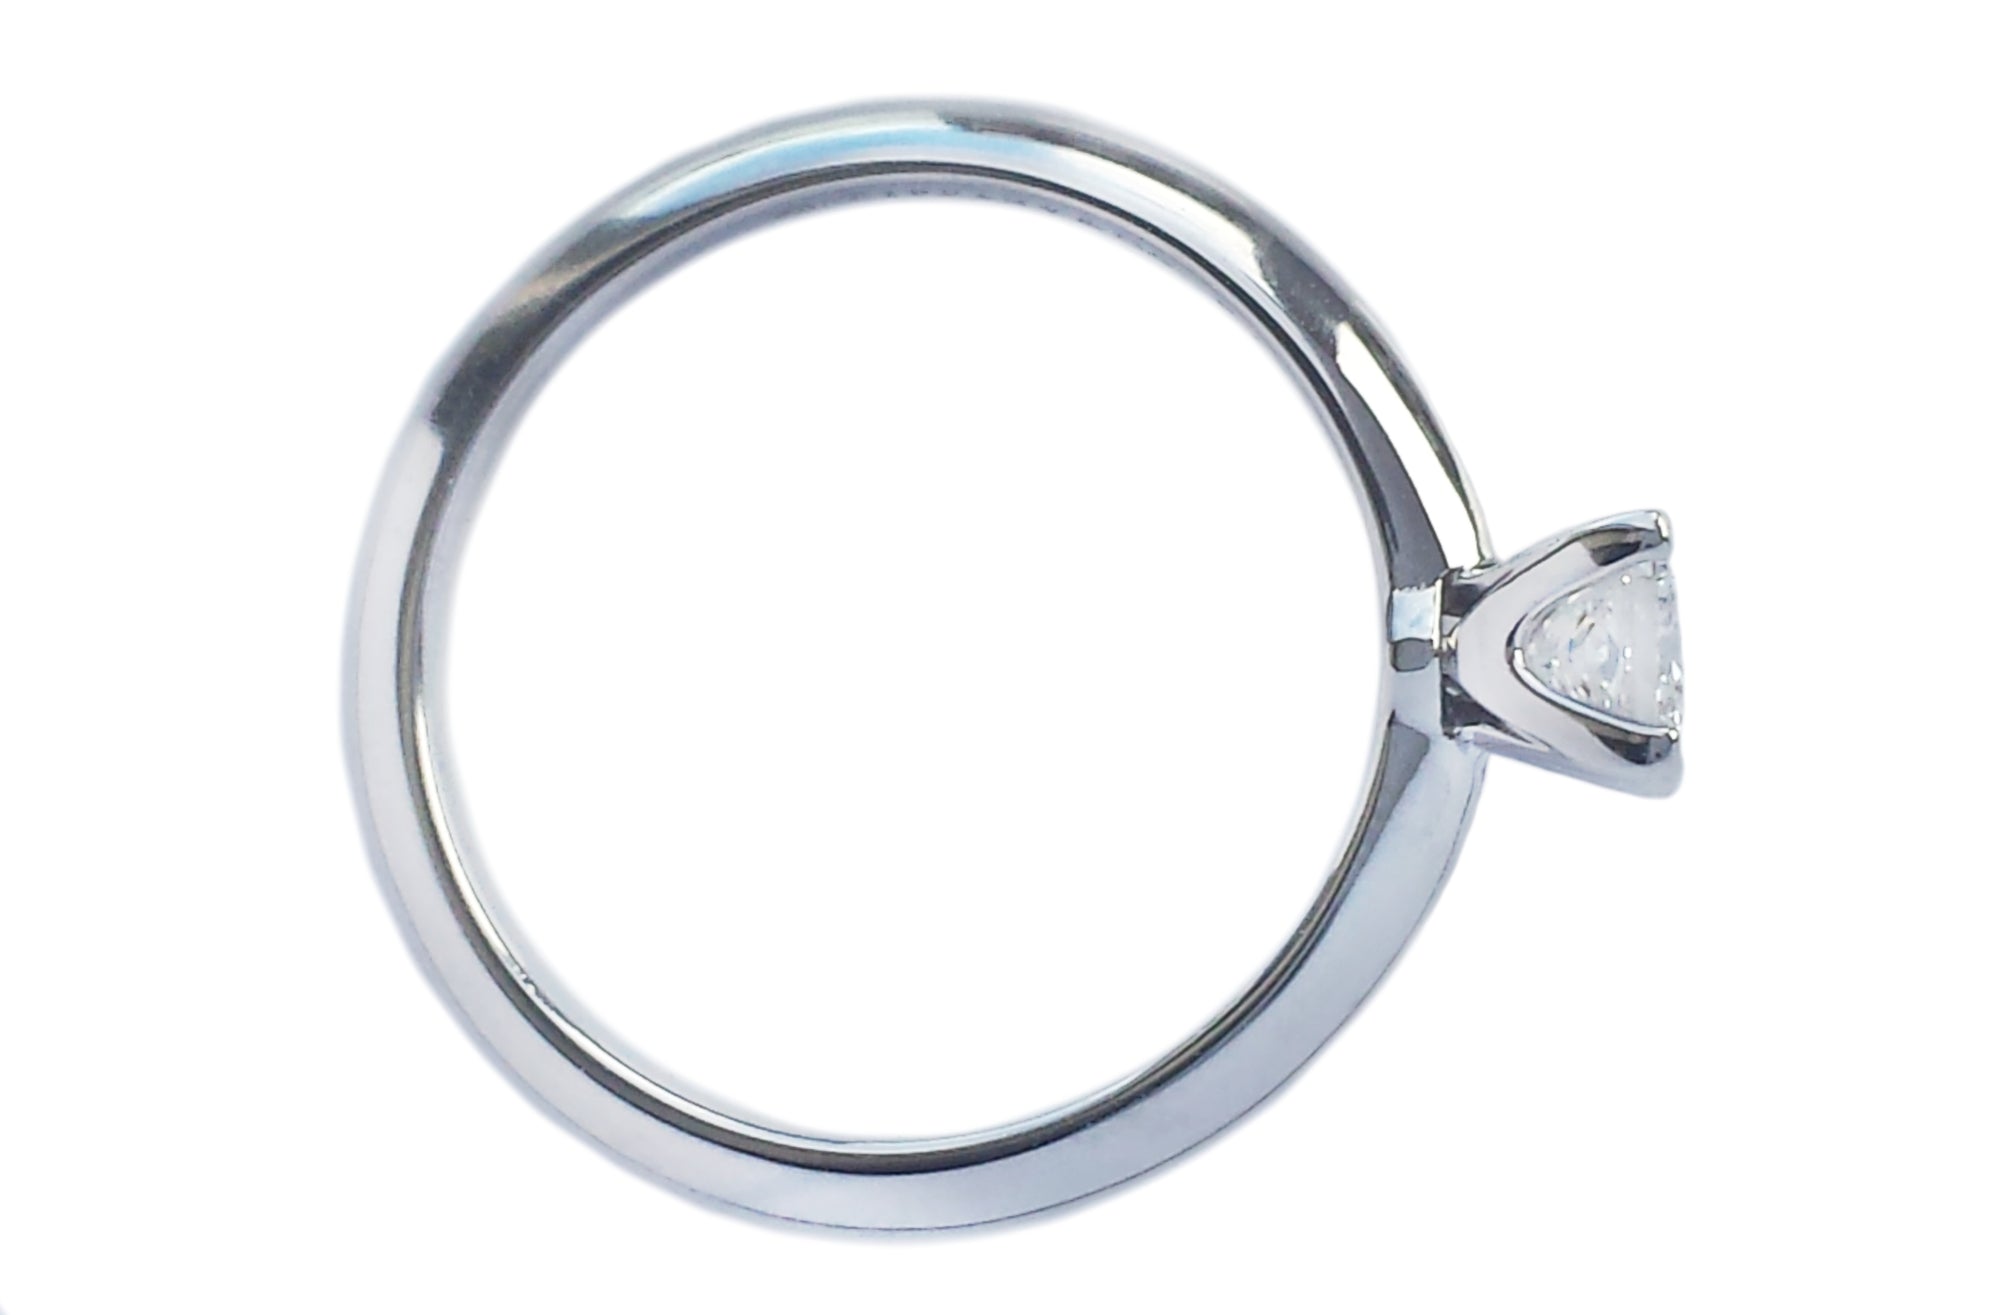 Tiffany & Co. 0.36ct G/VS Princess Cut Diamond Engagement Ring